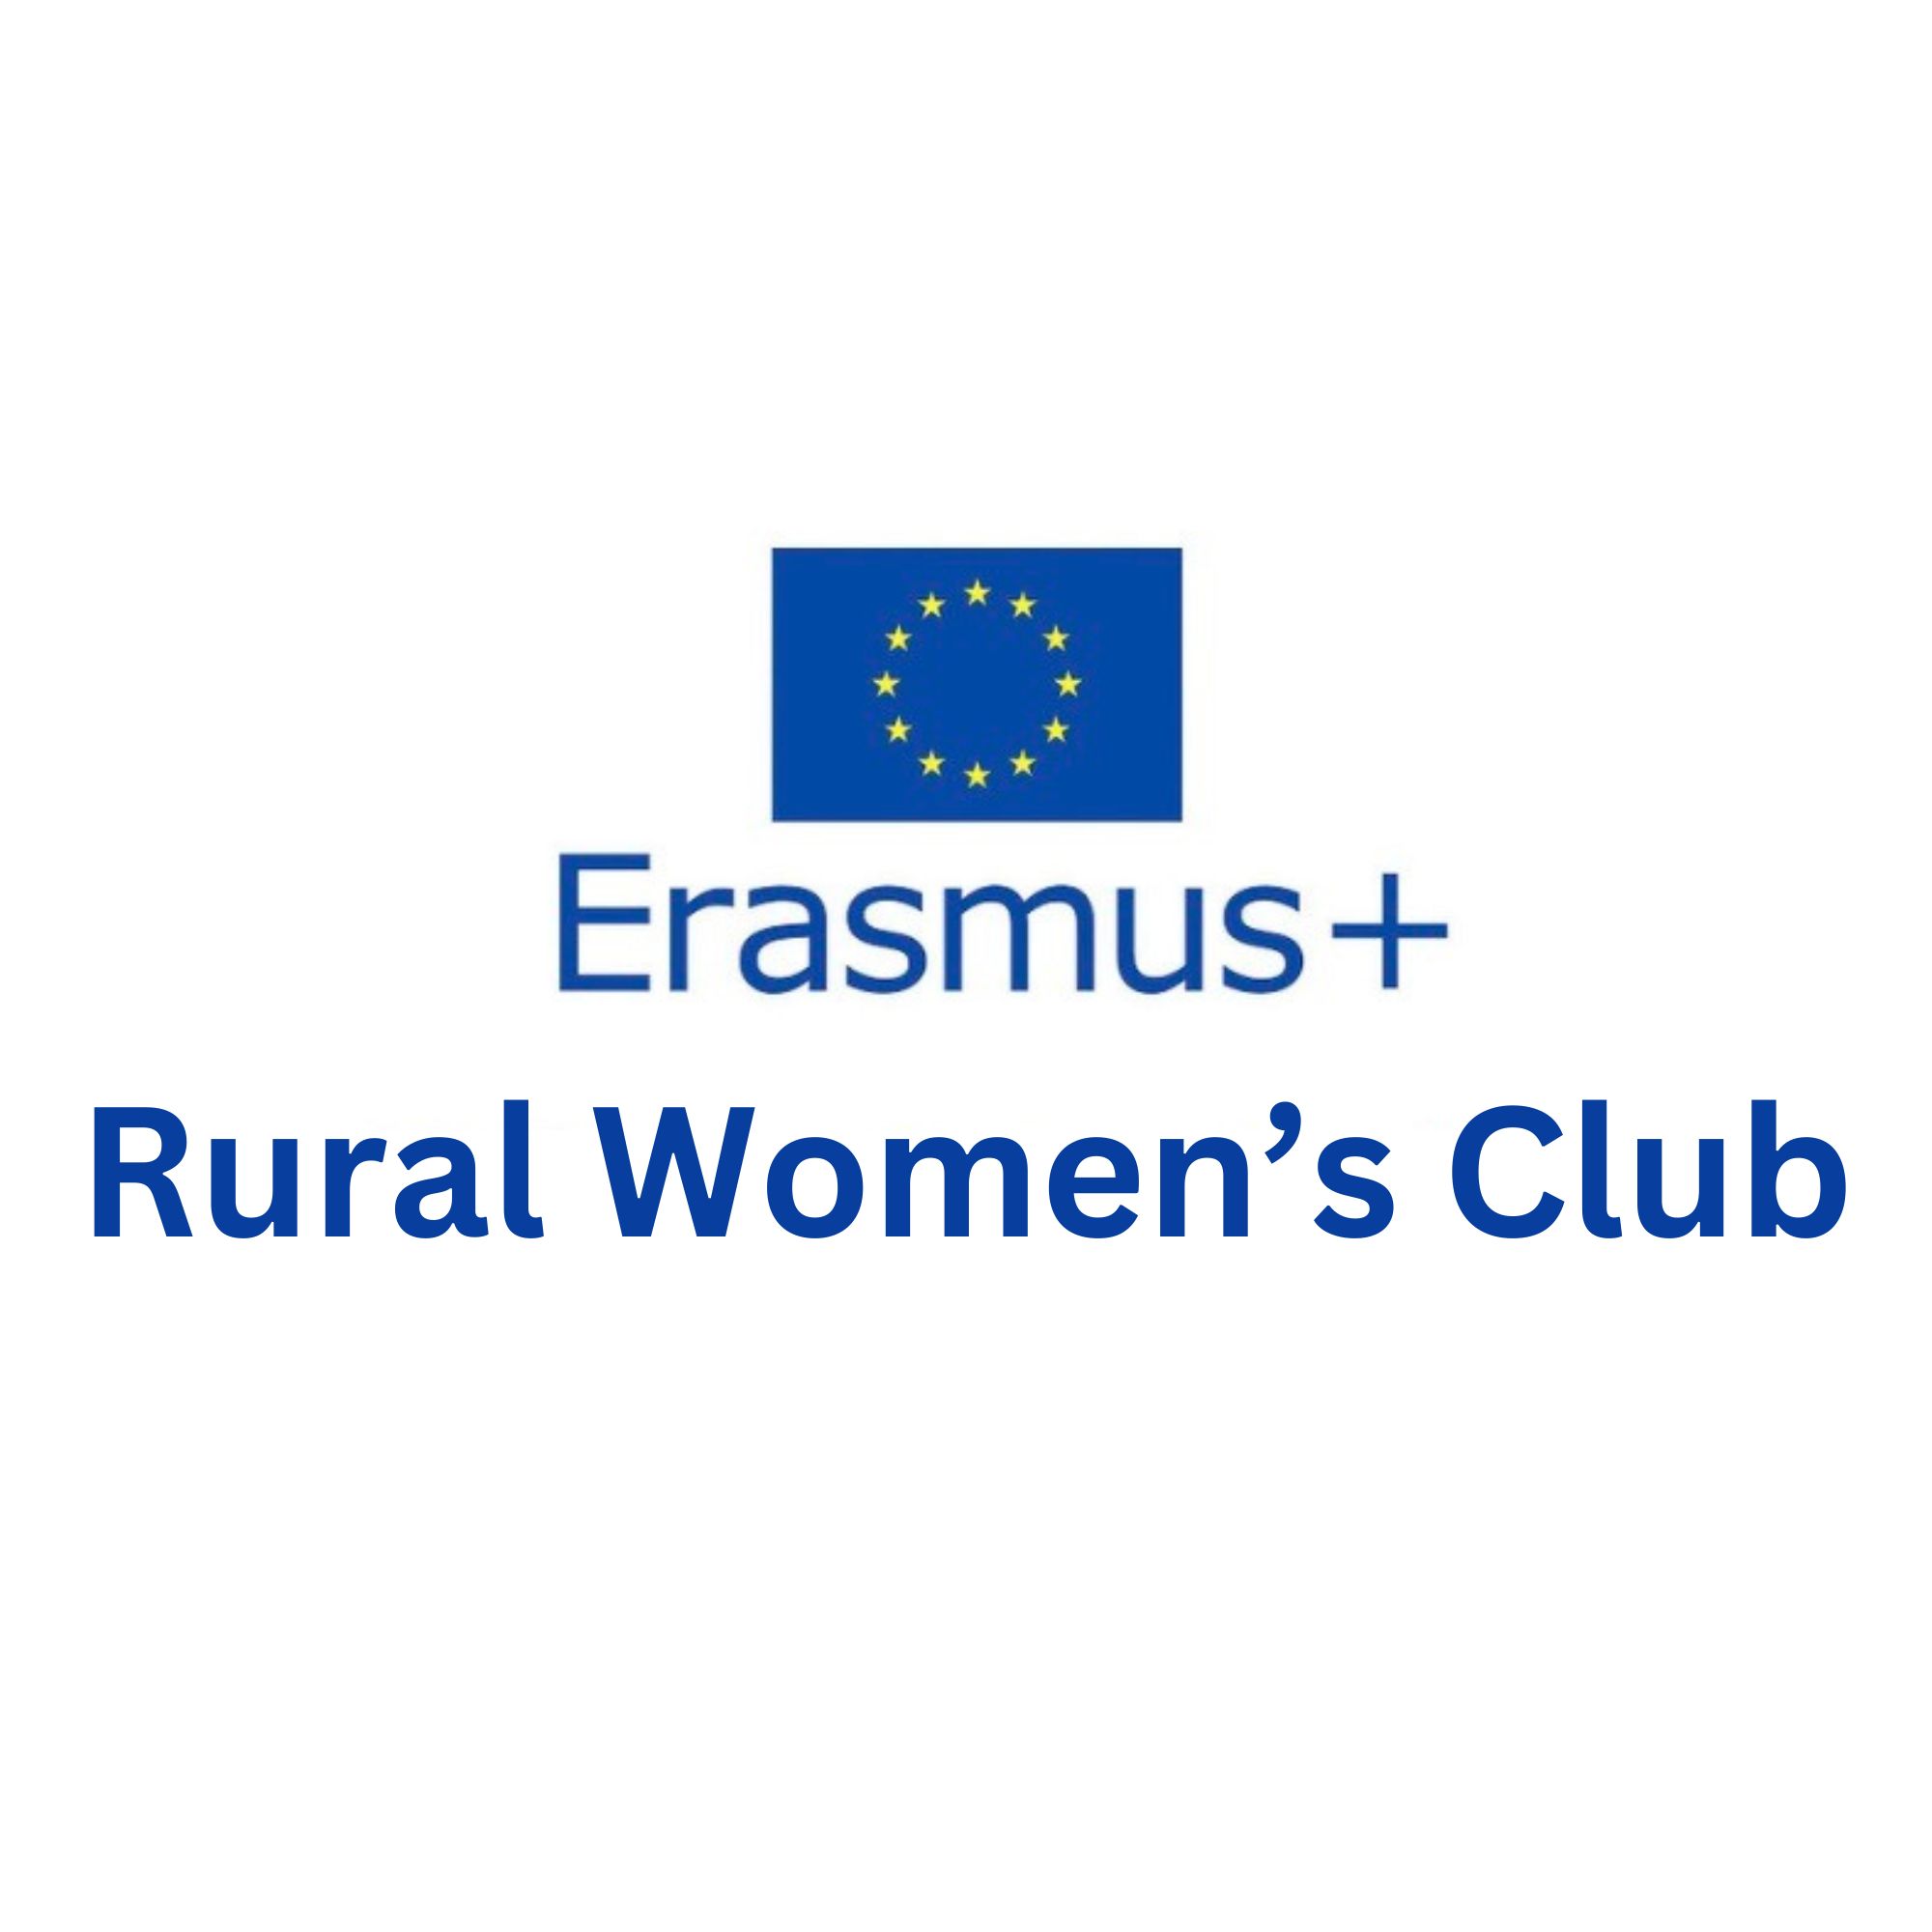 Rural Women's Club